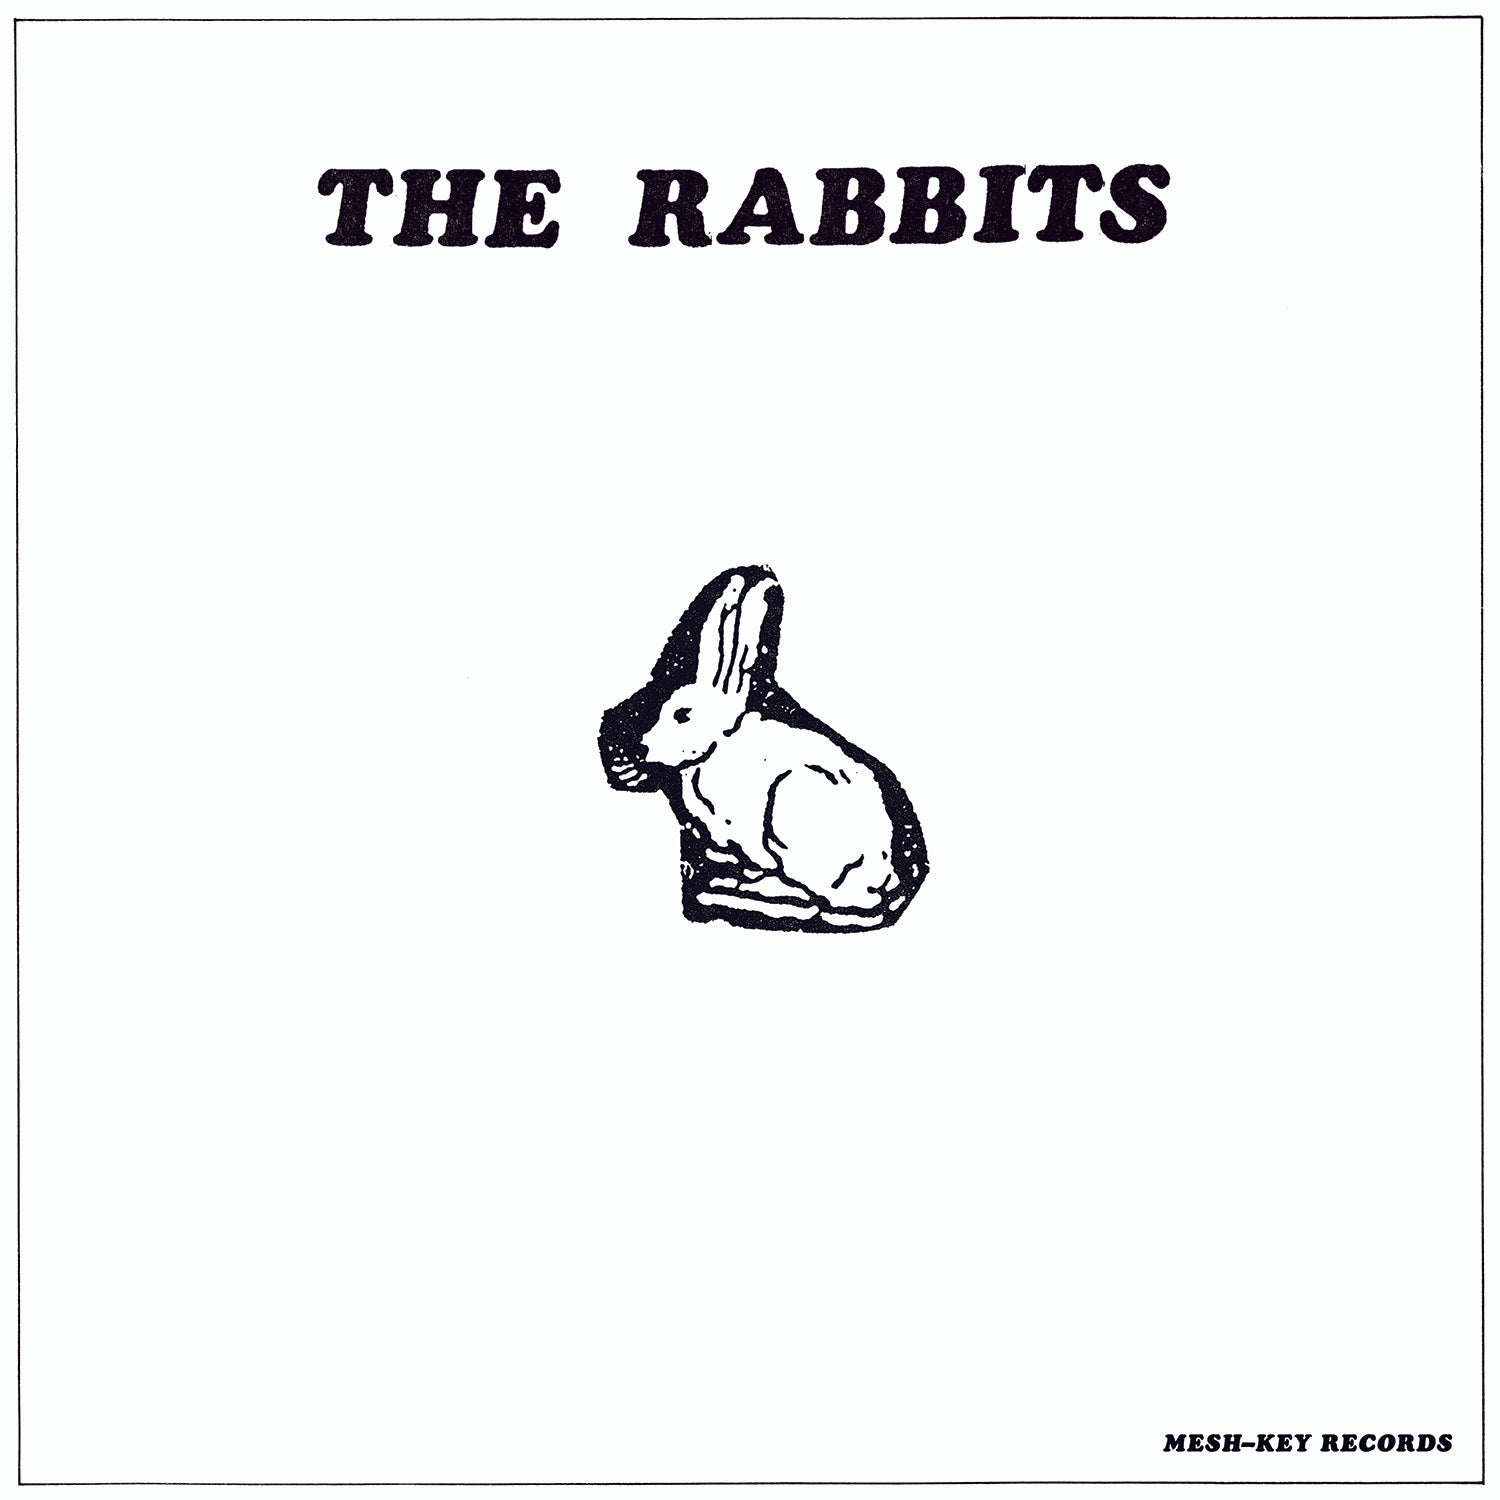 THE RABBITS - THE RABBITS Vinyl LP